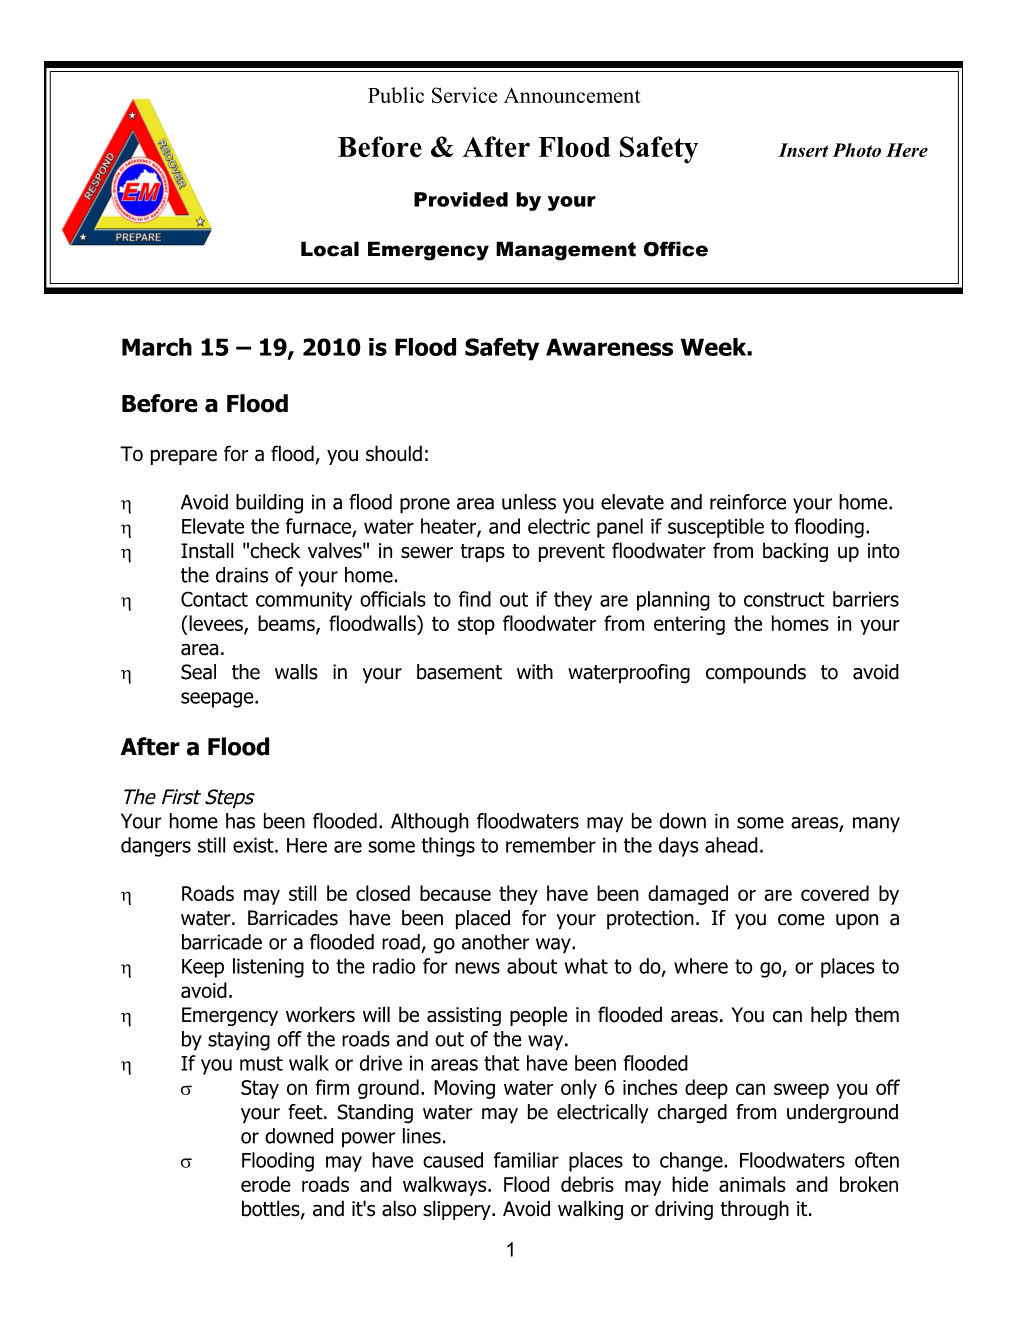 Flood Safety Week